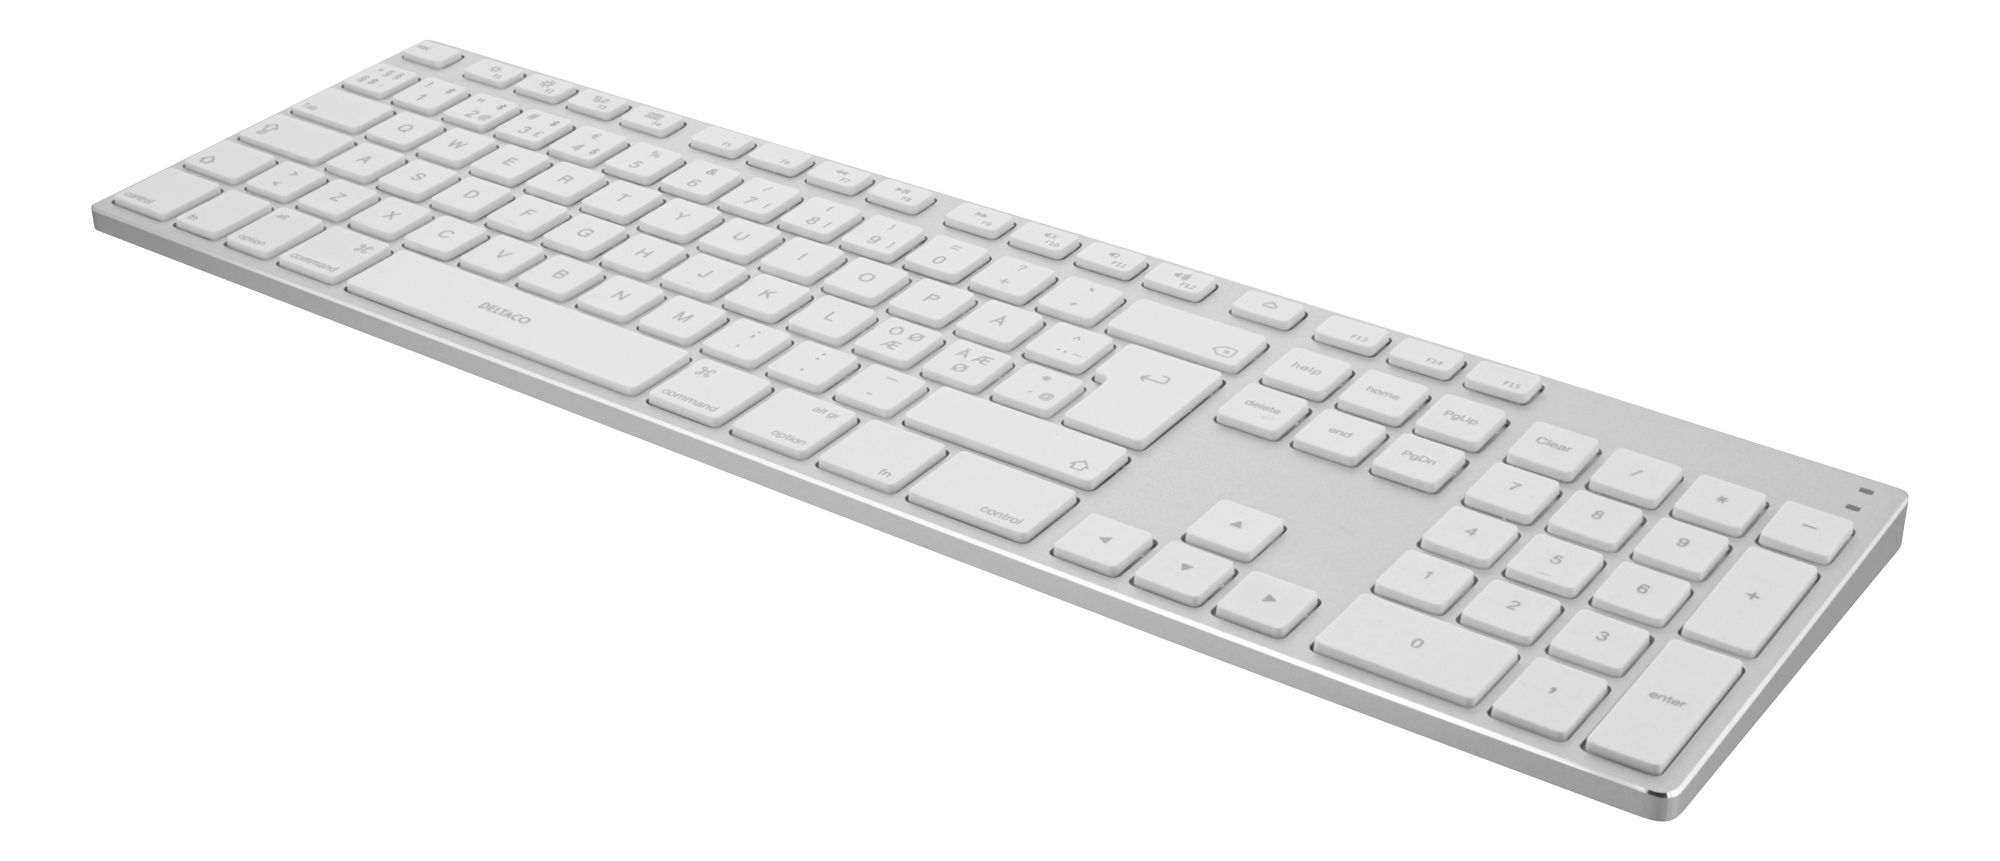 Deltaco Fullstørrelse Bluetooth aluminium tastatur, Bluetooth 3.0, innebygd  batteri, Nordisk layout, sølv - Eivind Aasnes